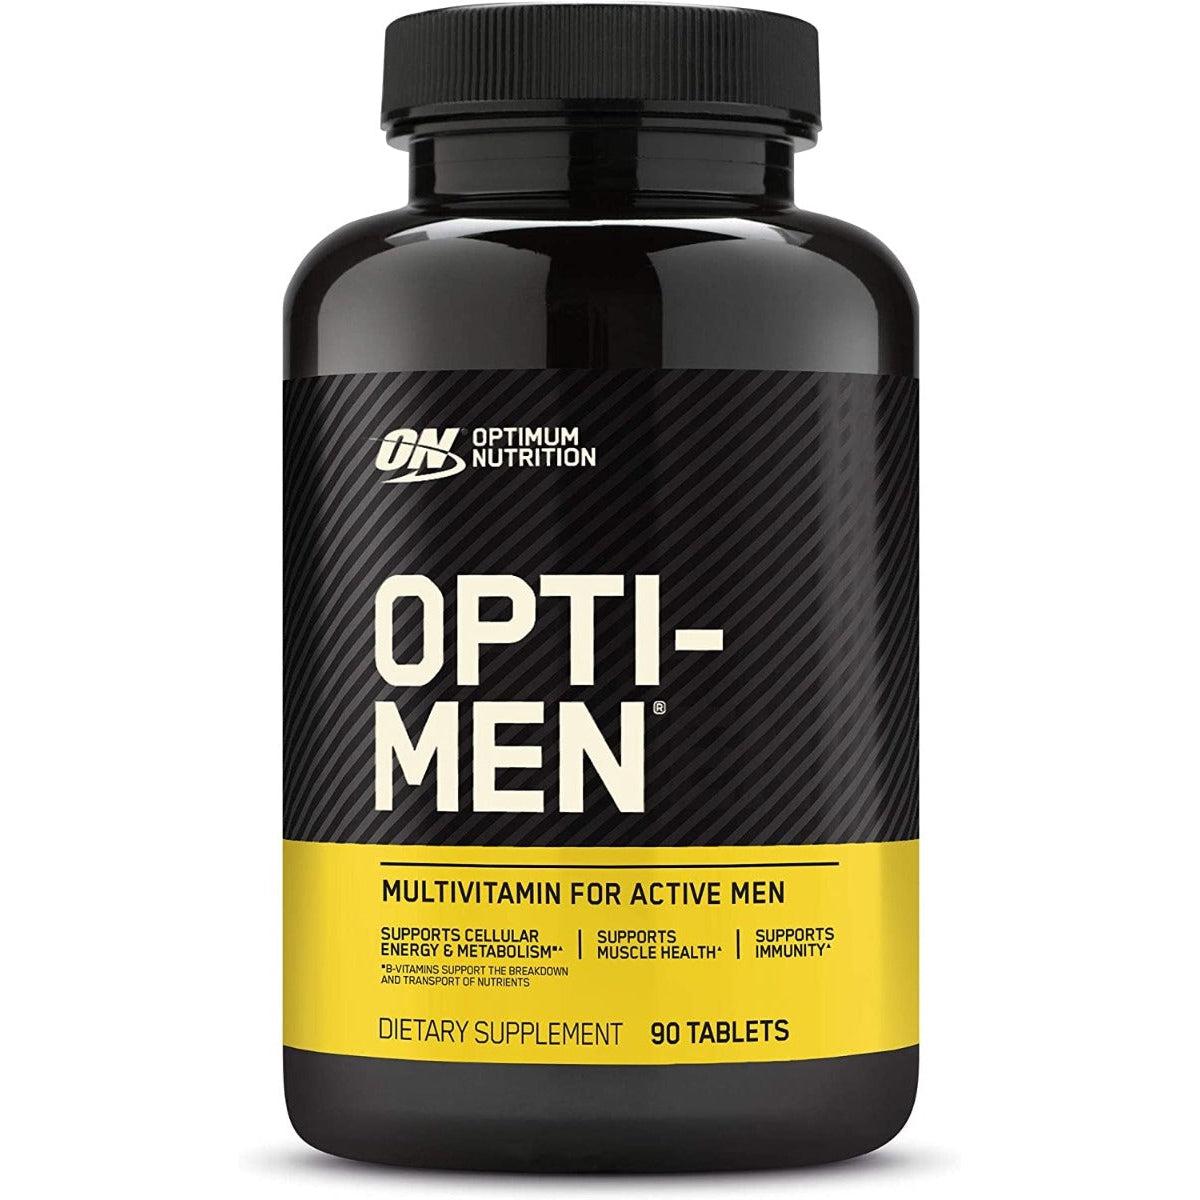 Optimum Nutrition OPTI-MEN Multivitamins 90 Tablets